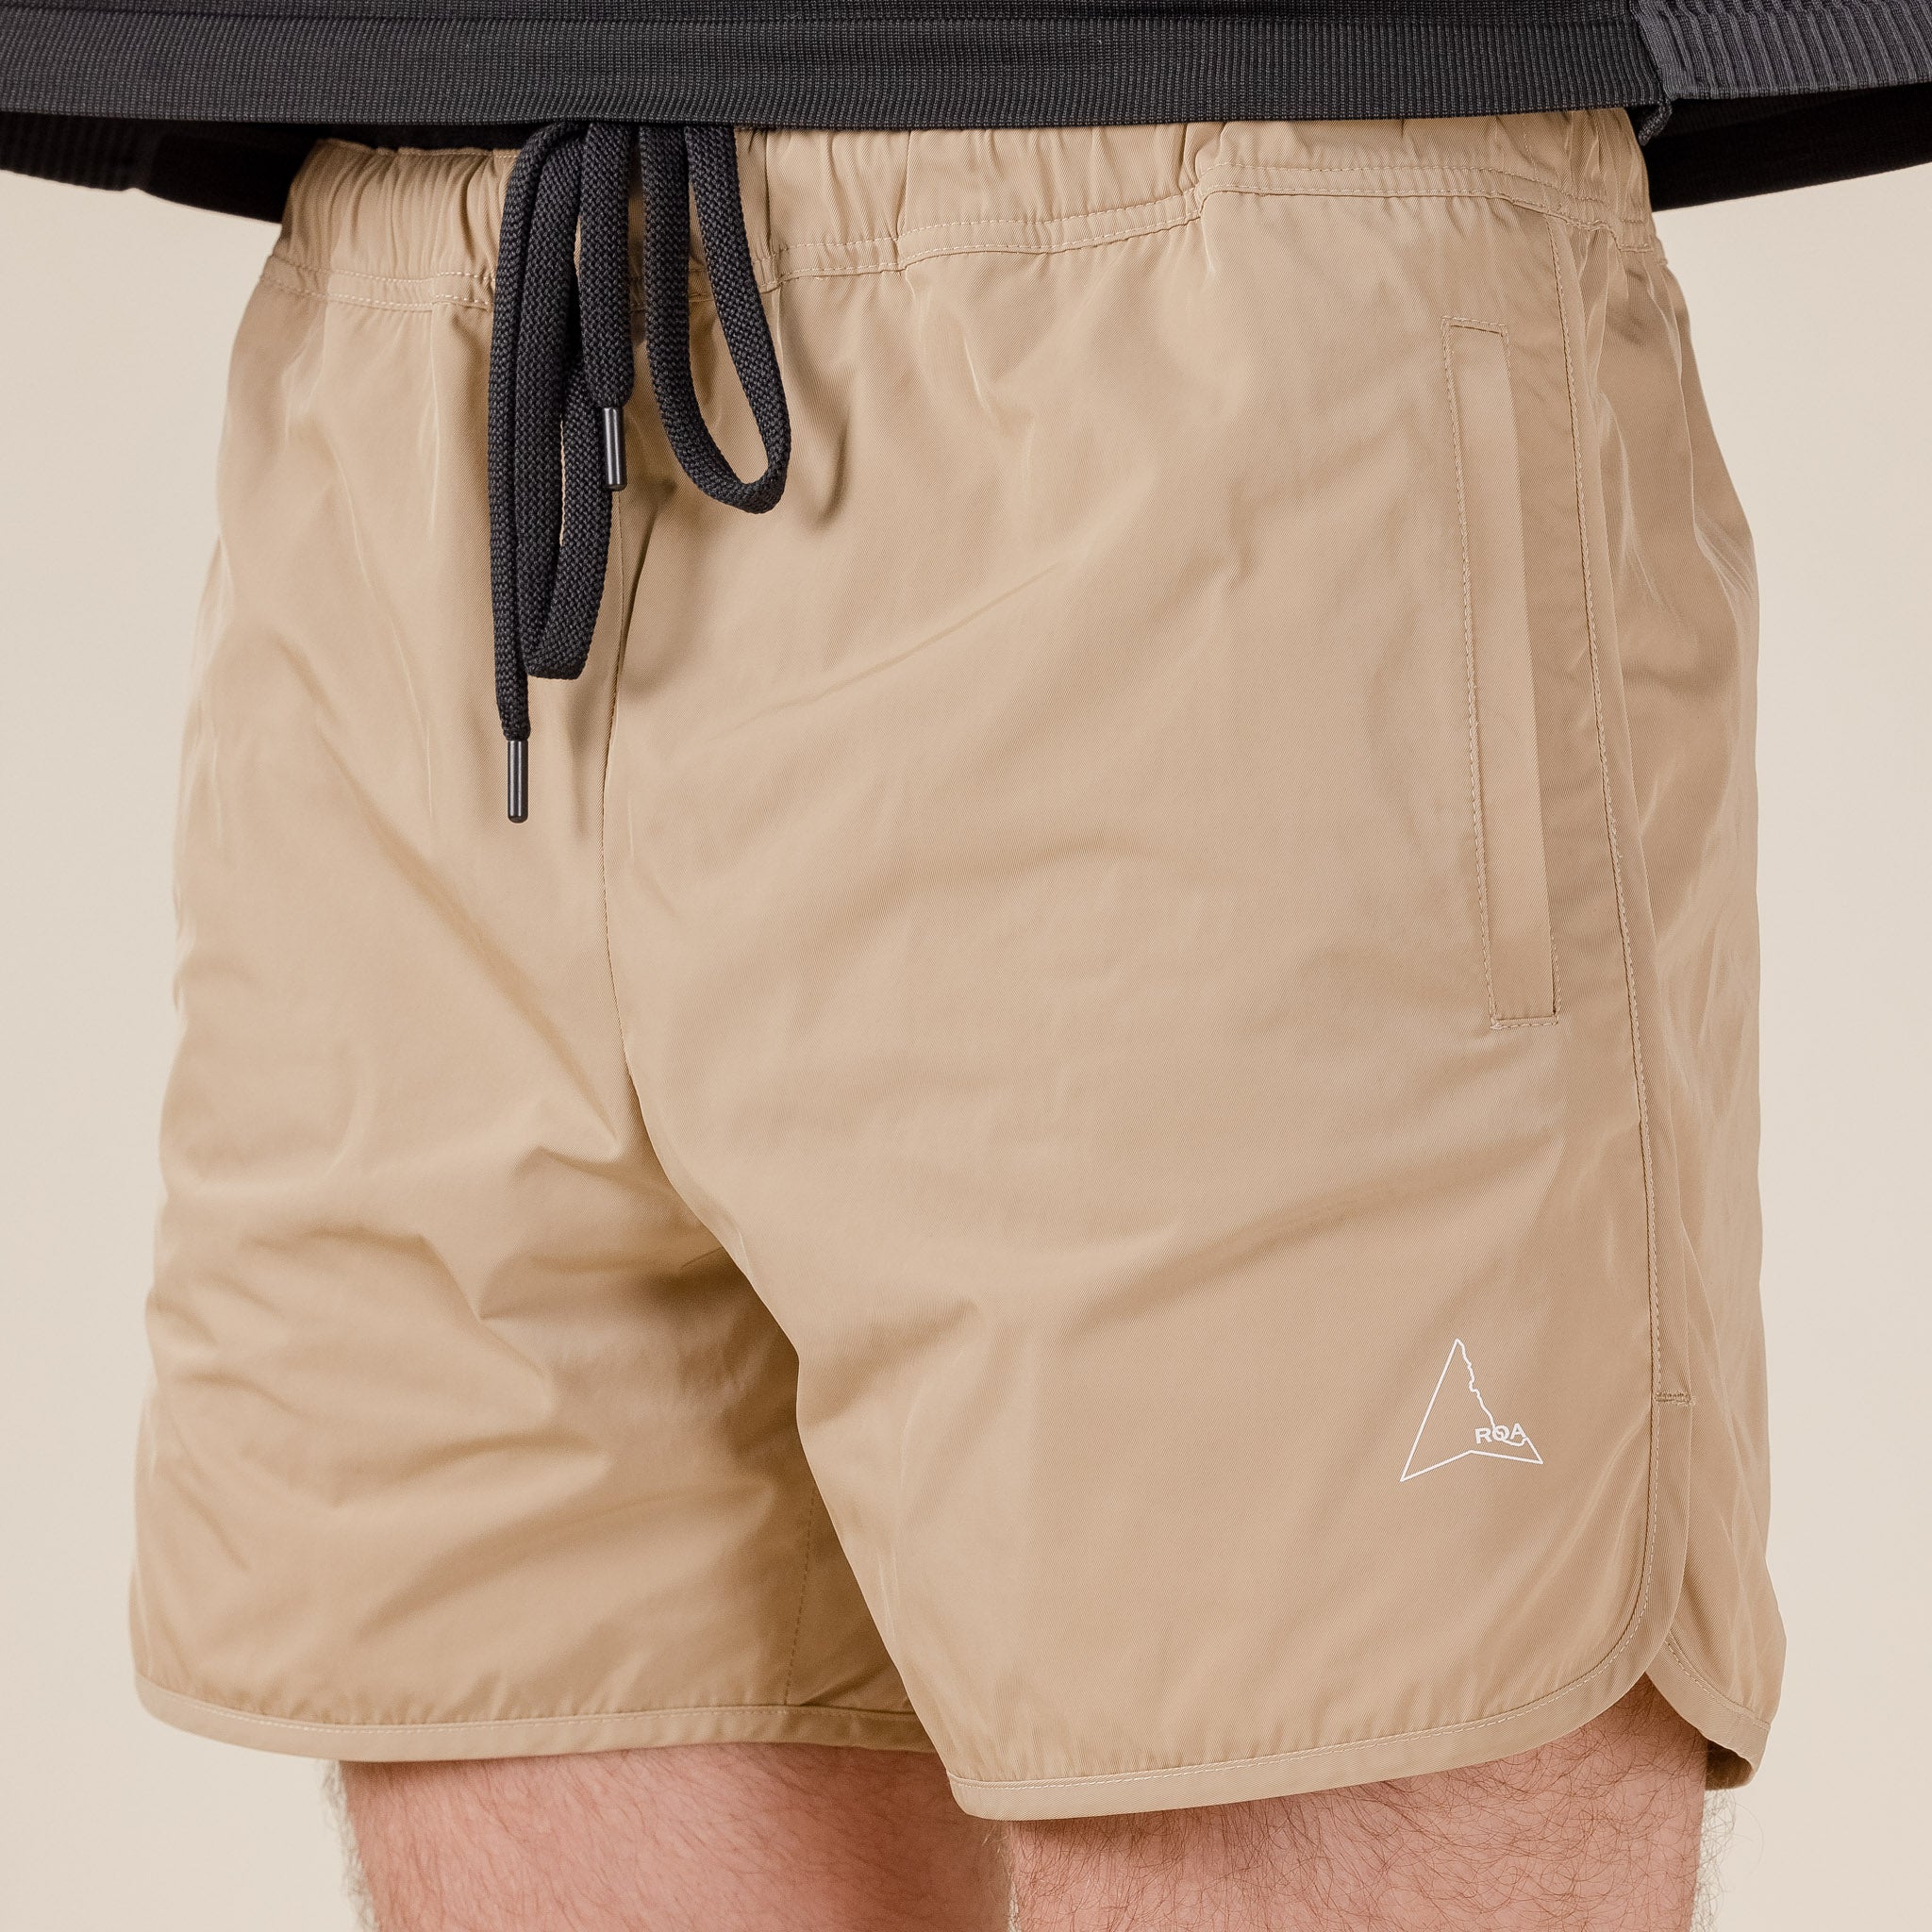 Style Number: RBM0055FA50 Roa Hiking - Swim Shorts - Brick Beige "roa stockists" "roa hiking stockists" "roa apparel"